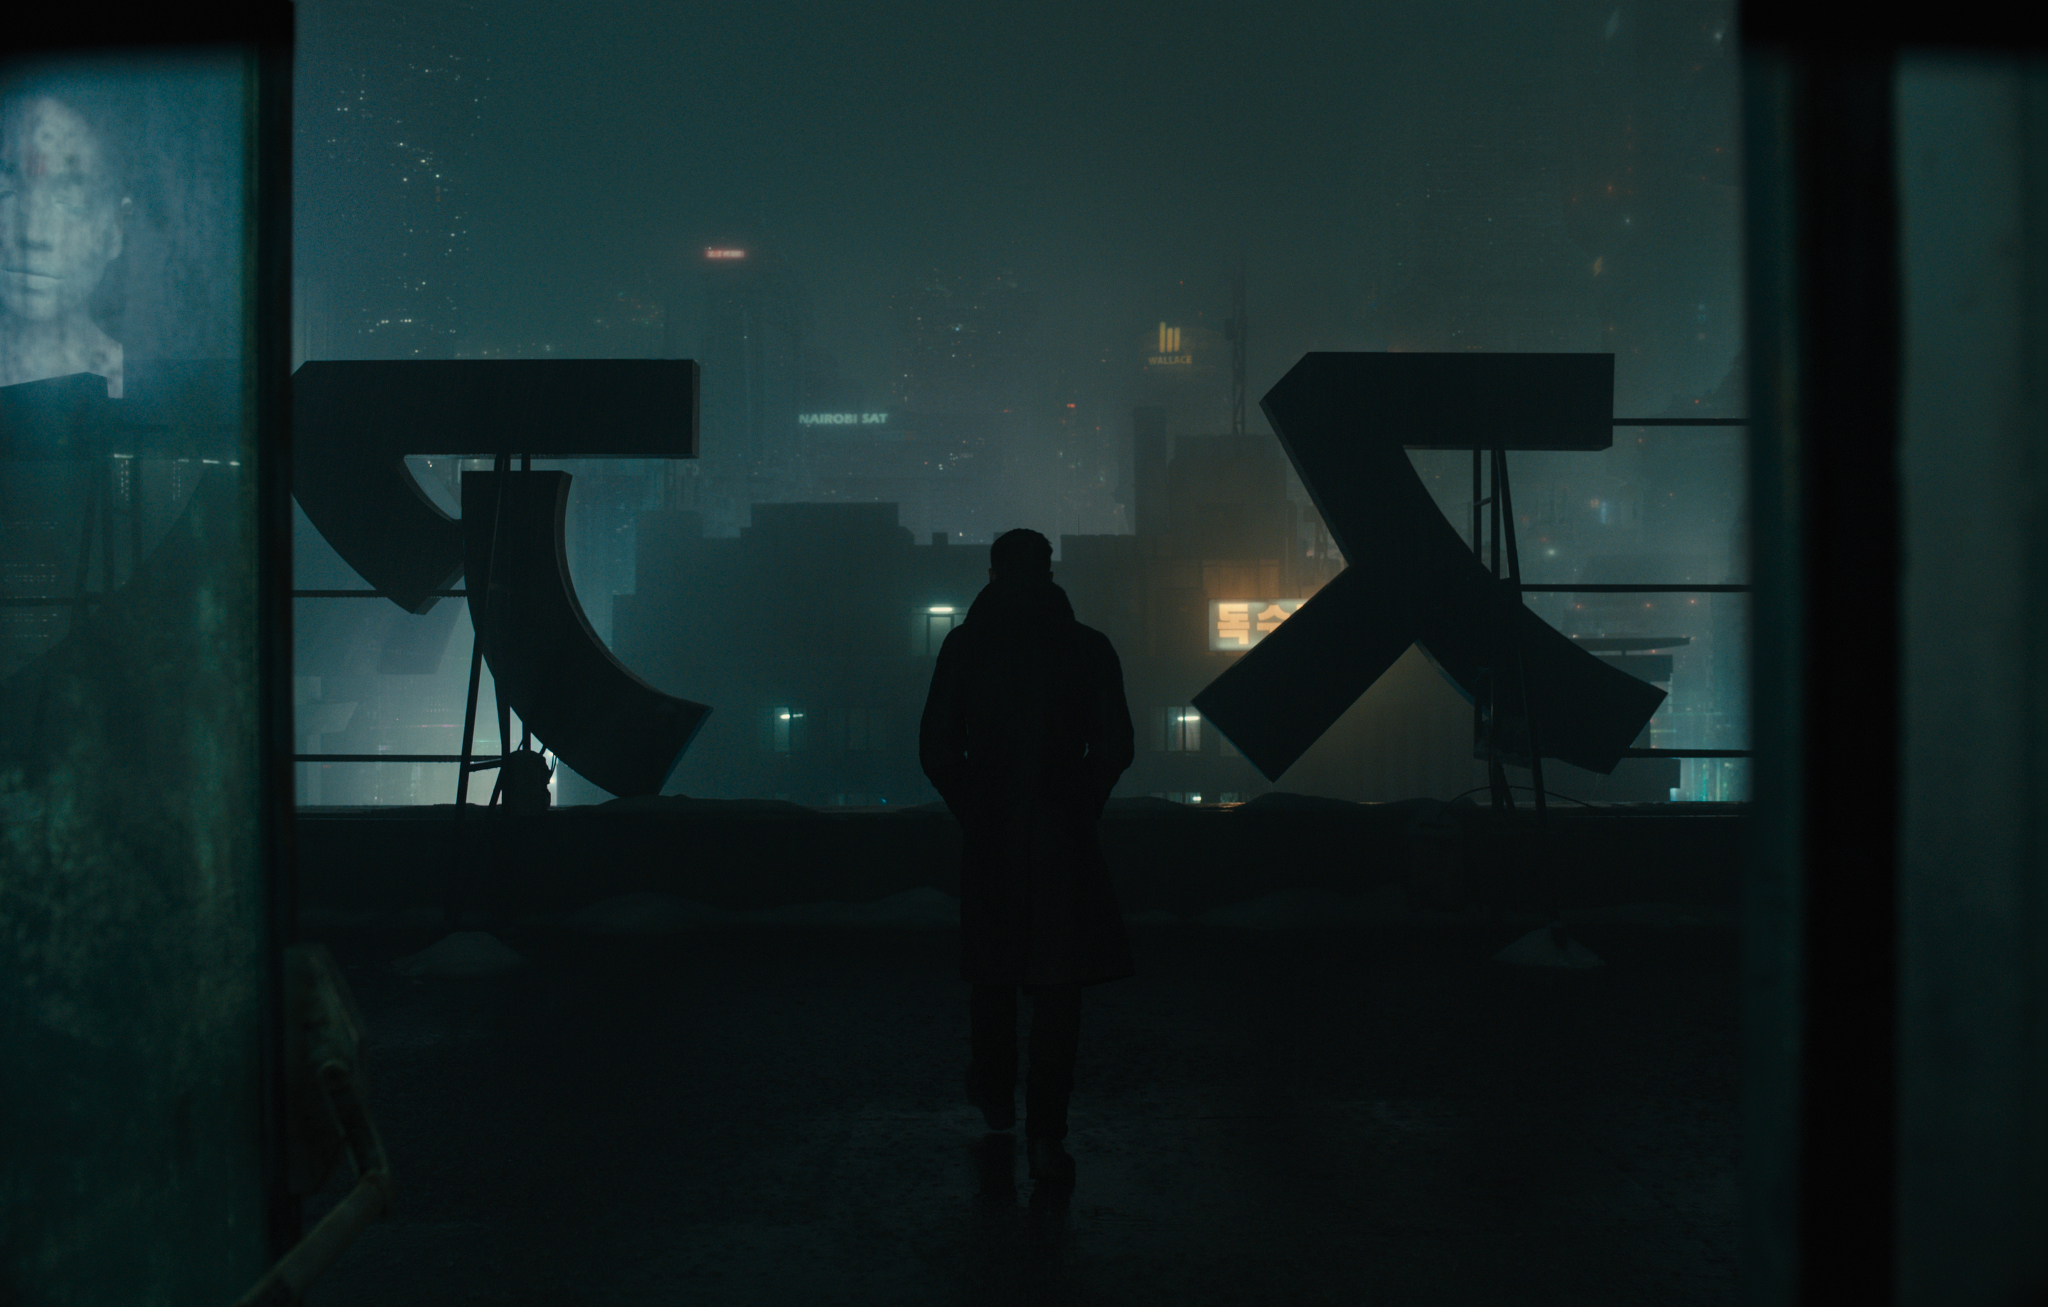 People 2048x1307 Blade Runner 2049 movies men actor Ryan Gosling dark night city lights